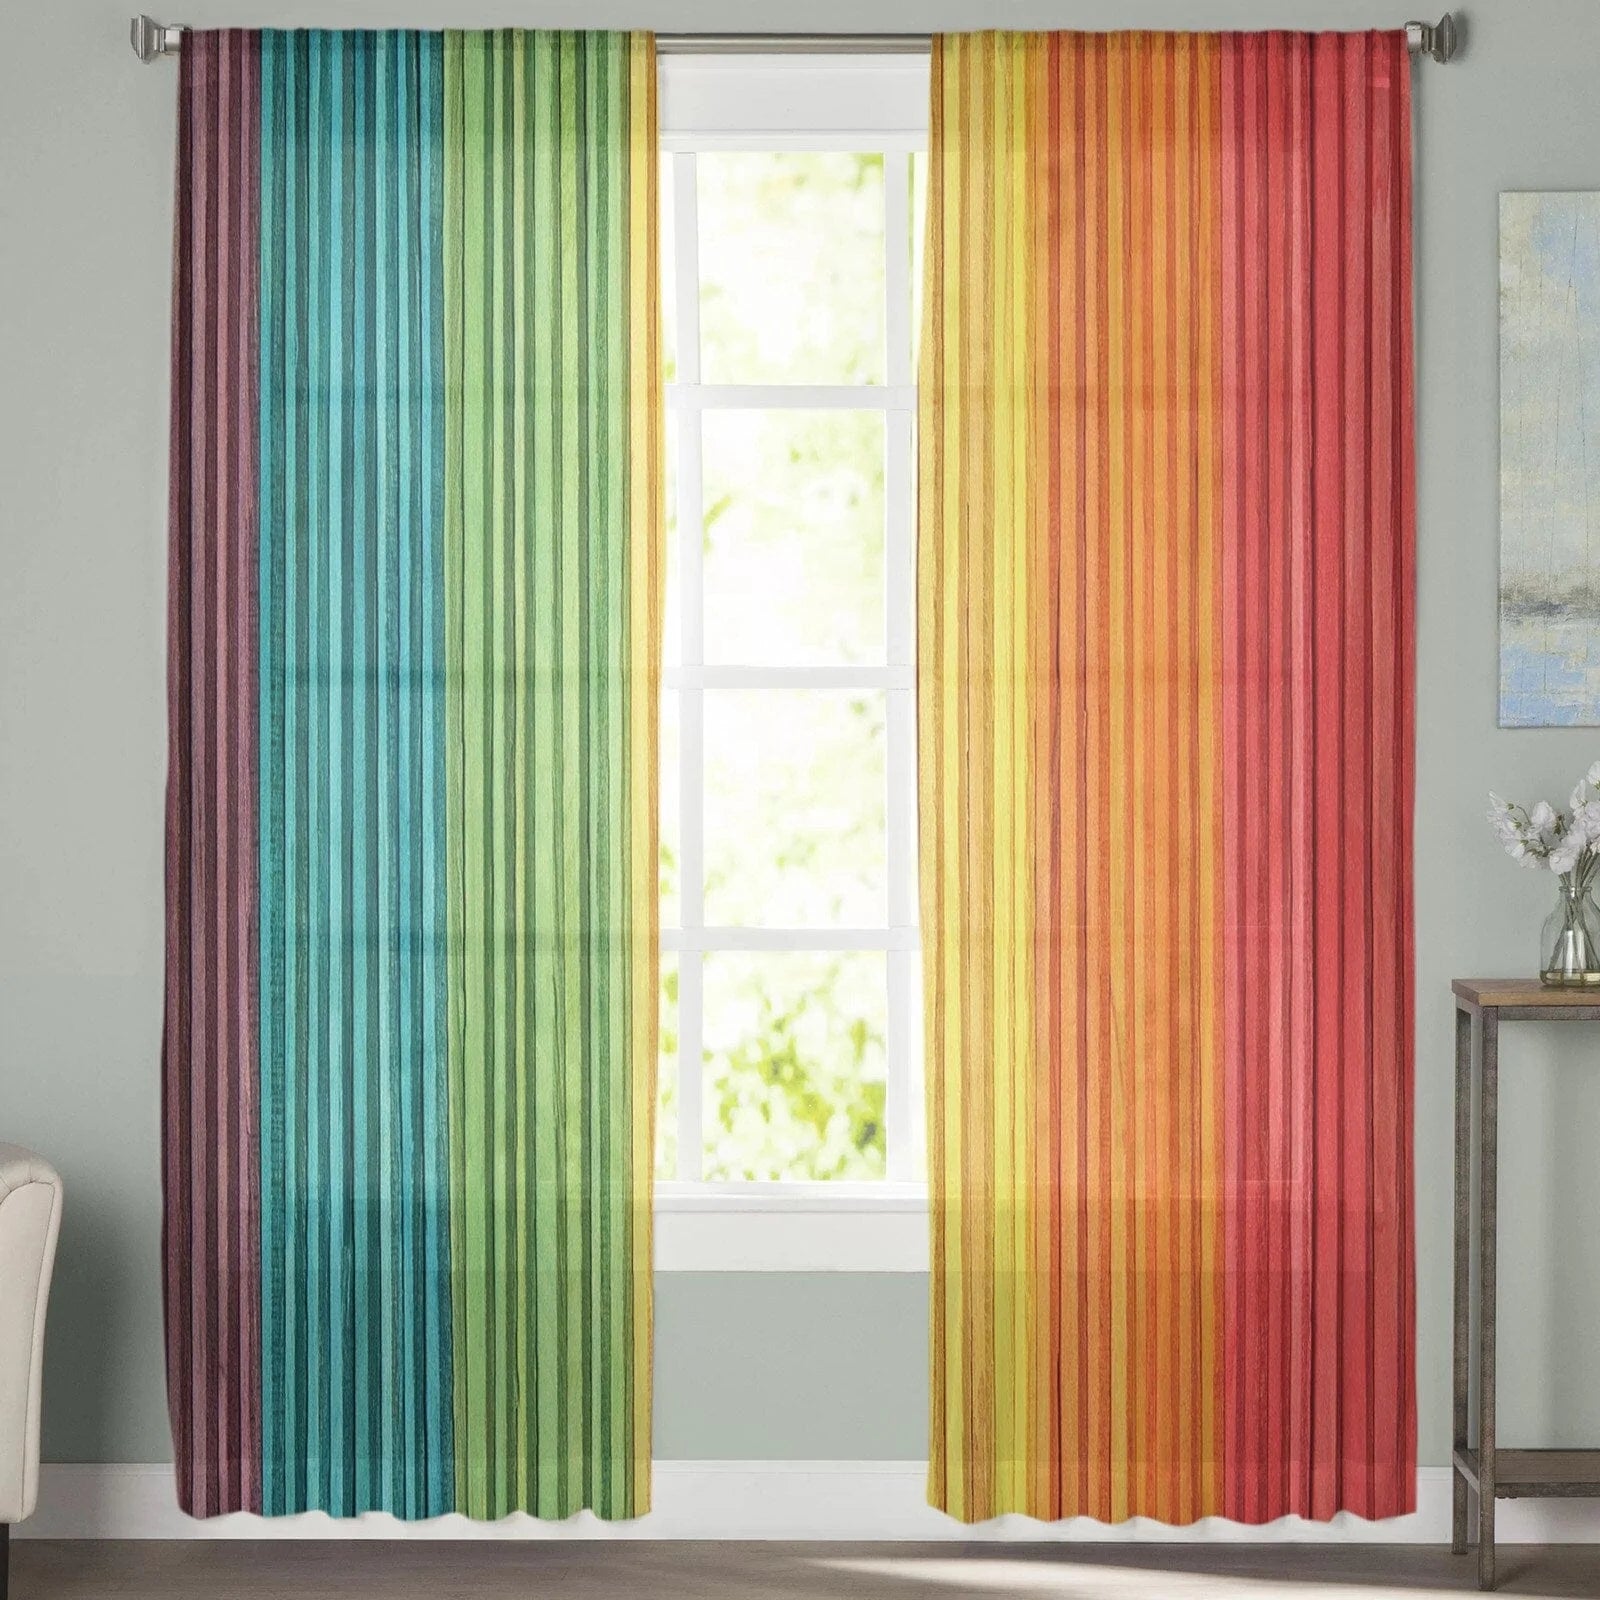 Rainbow Chiffon Sheer Curtains Blackbrdstore